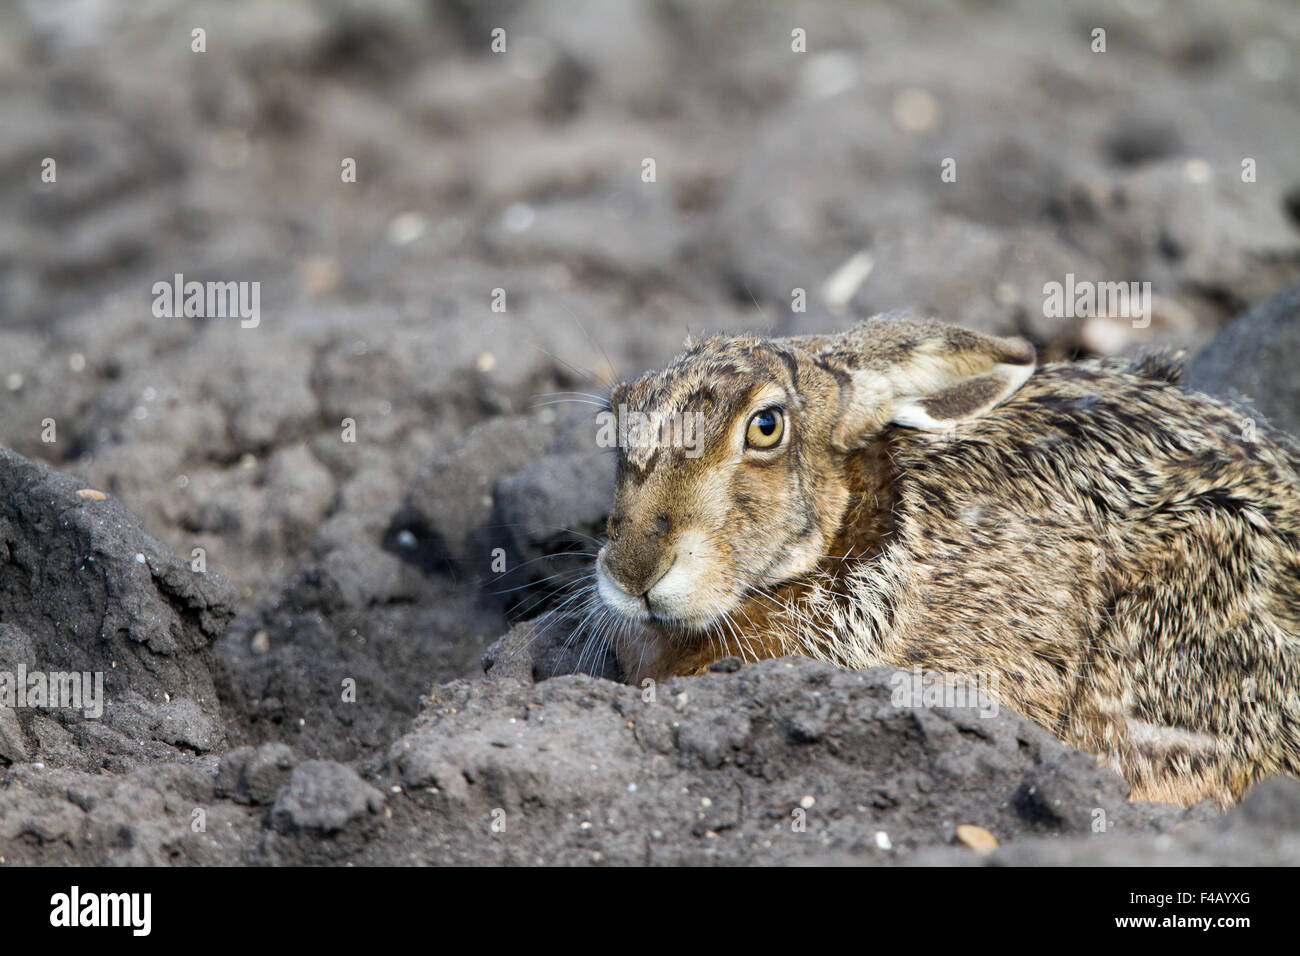 European hare Stock Photo